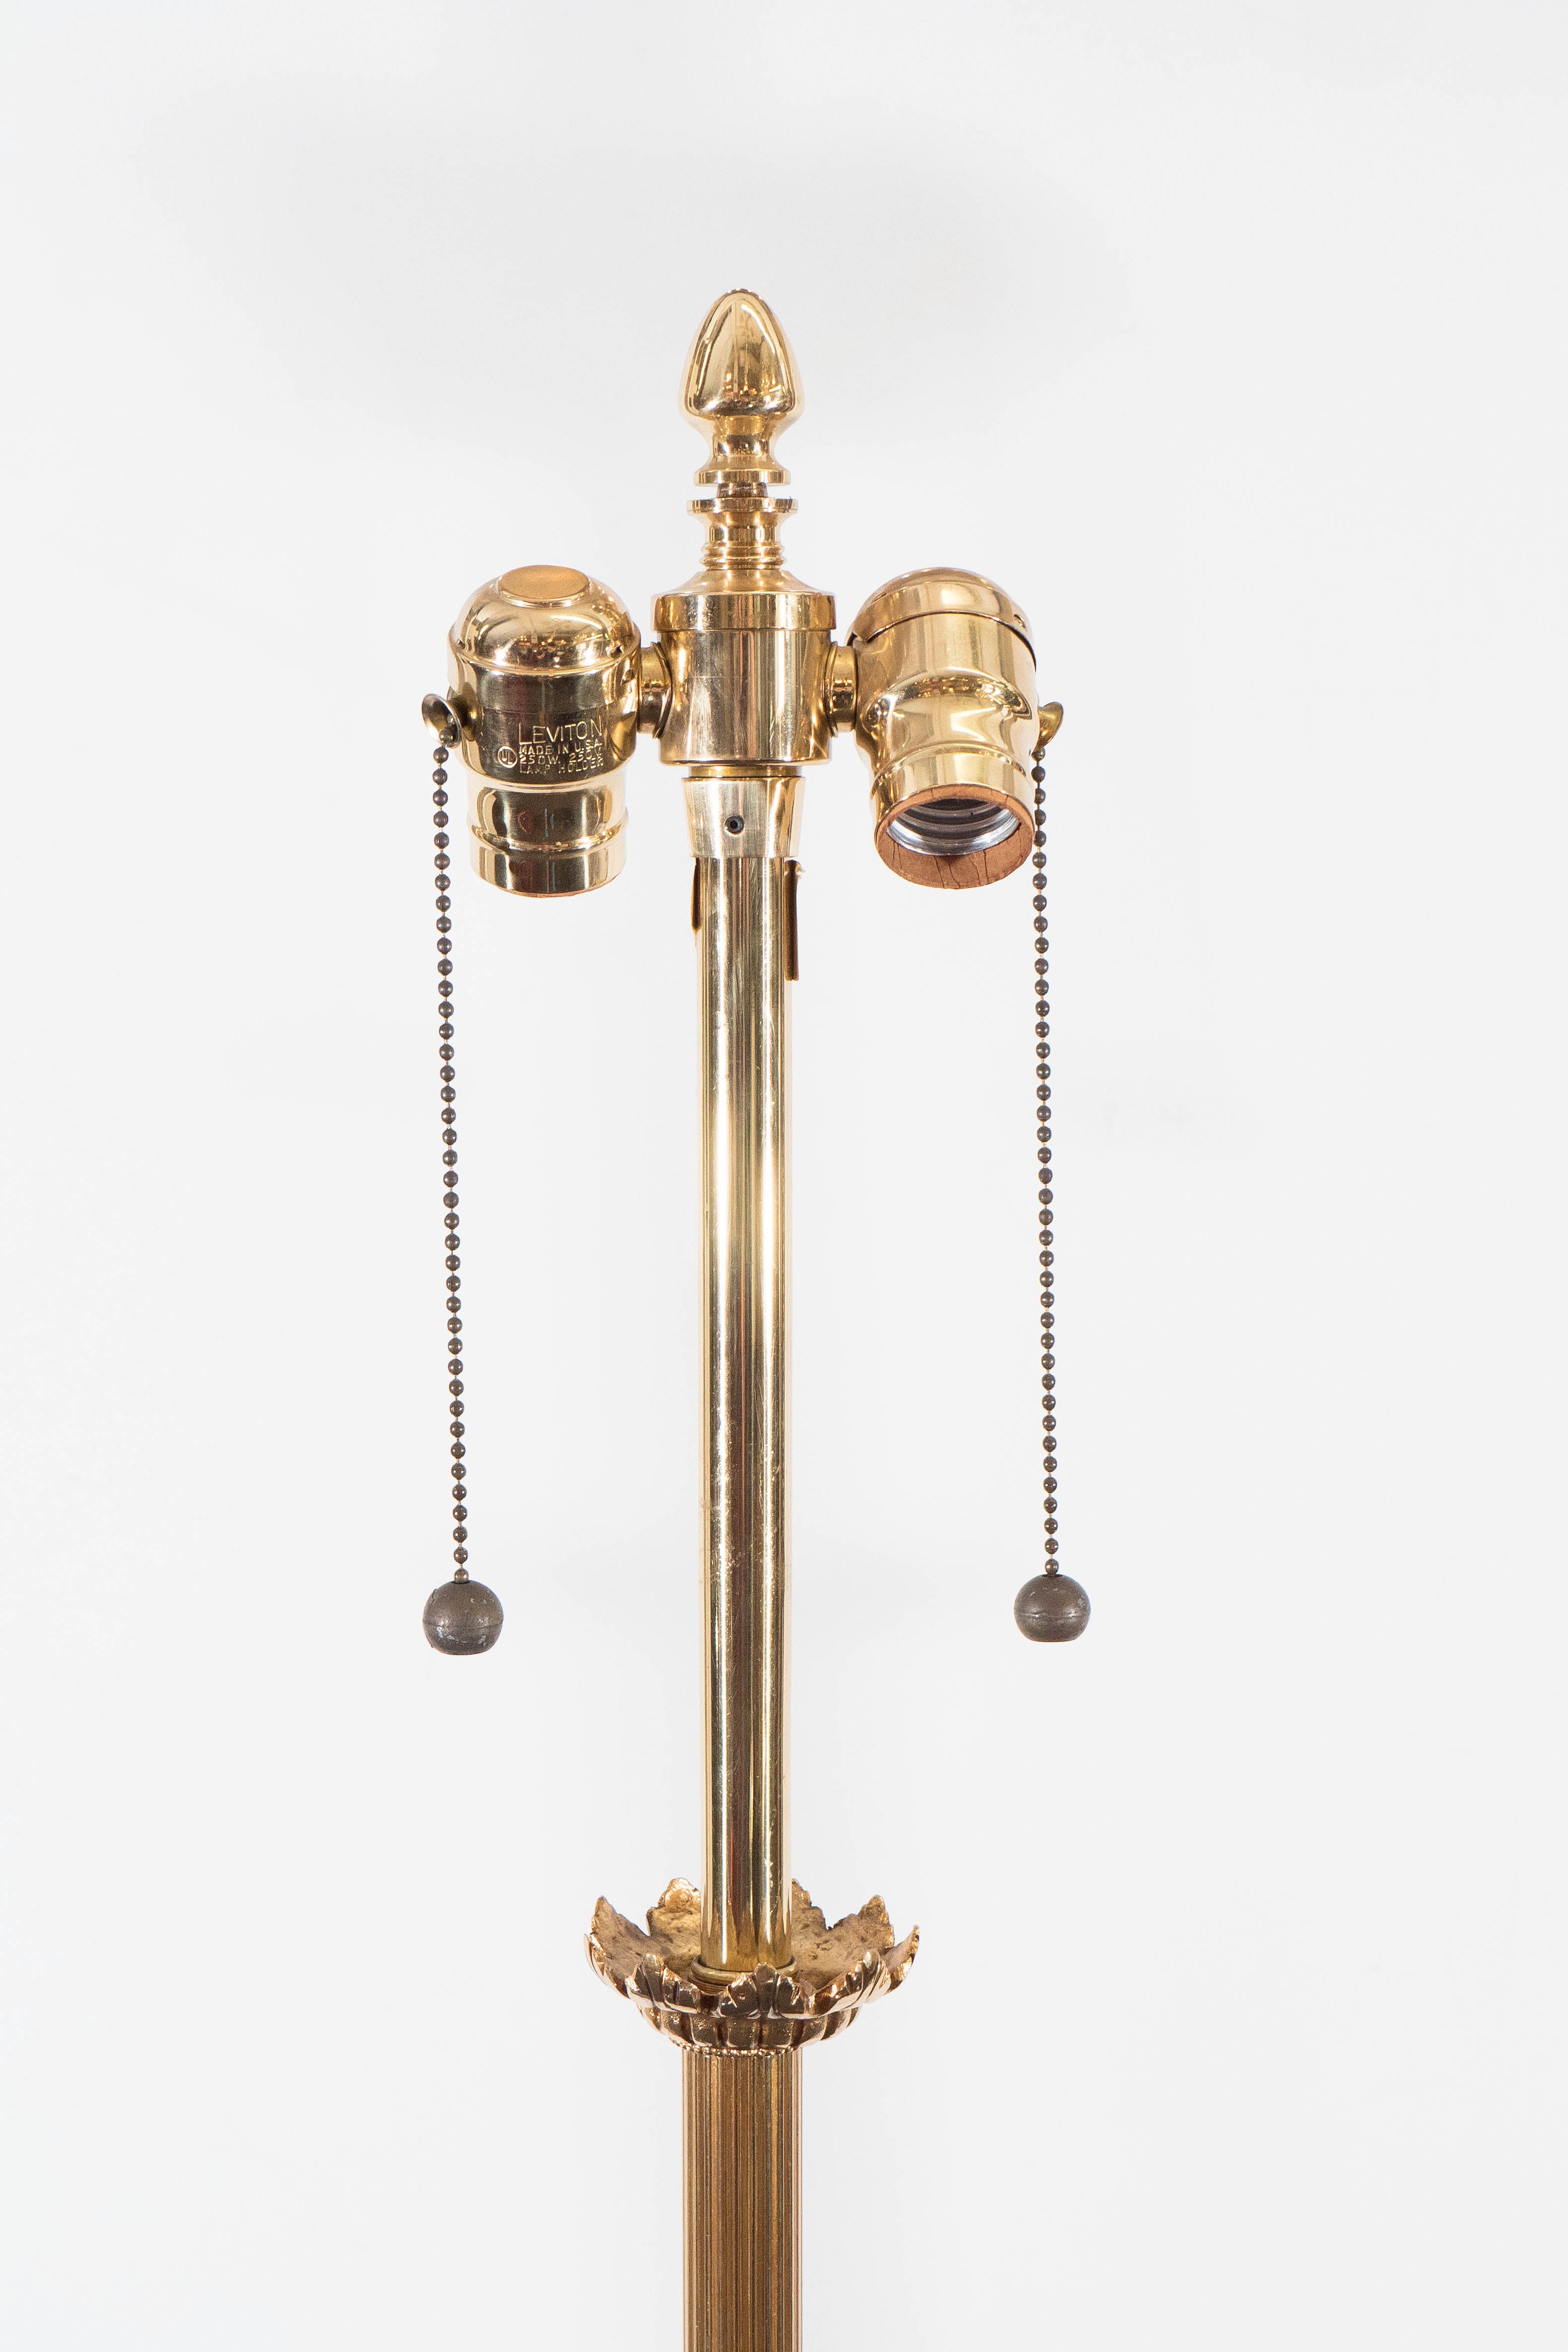 Hollywood Regency Pair of Midcentury Brass Floor Lamps by Marbro Lamp Company